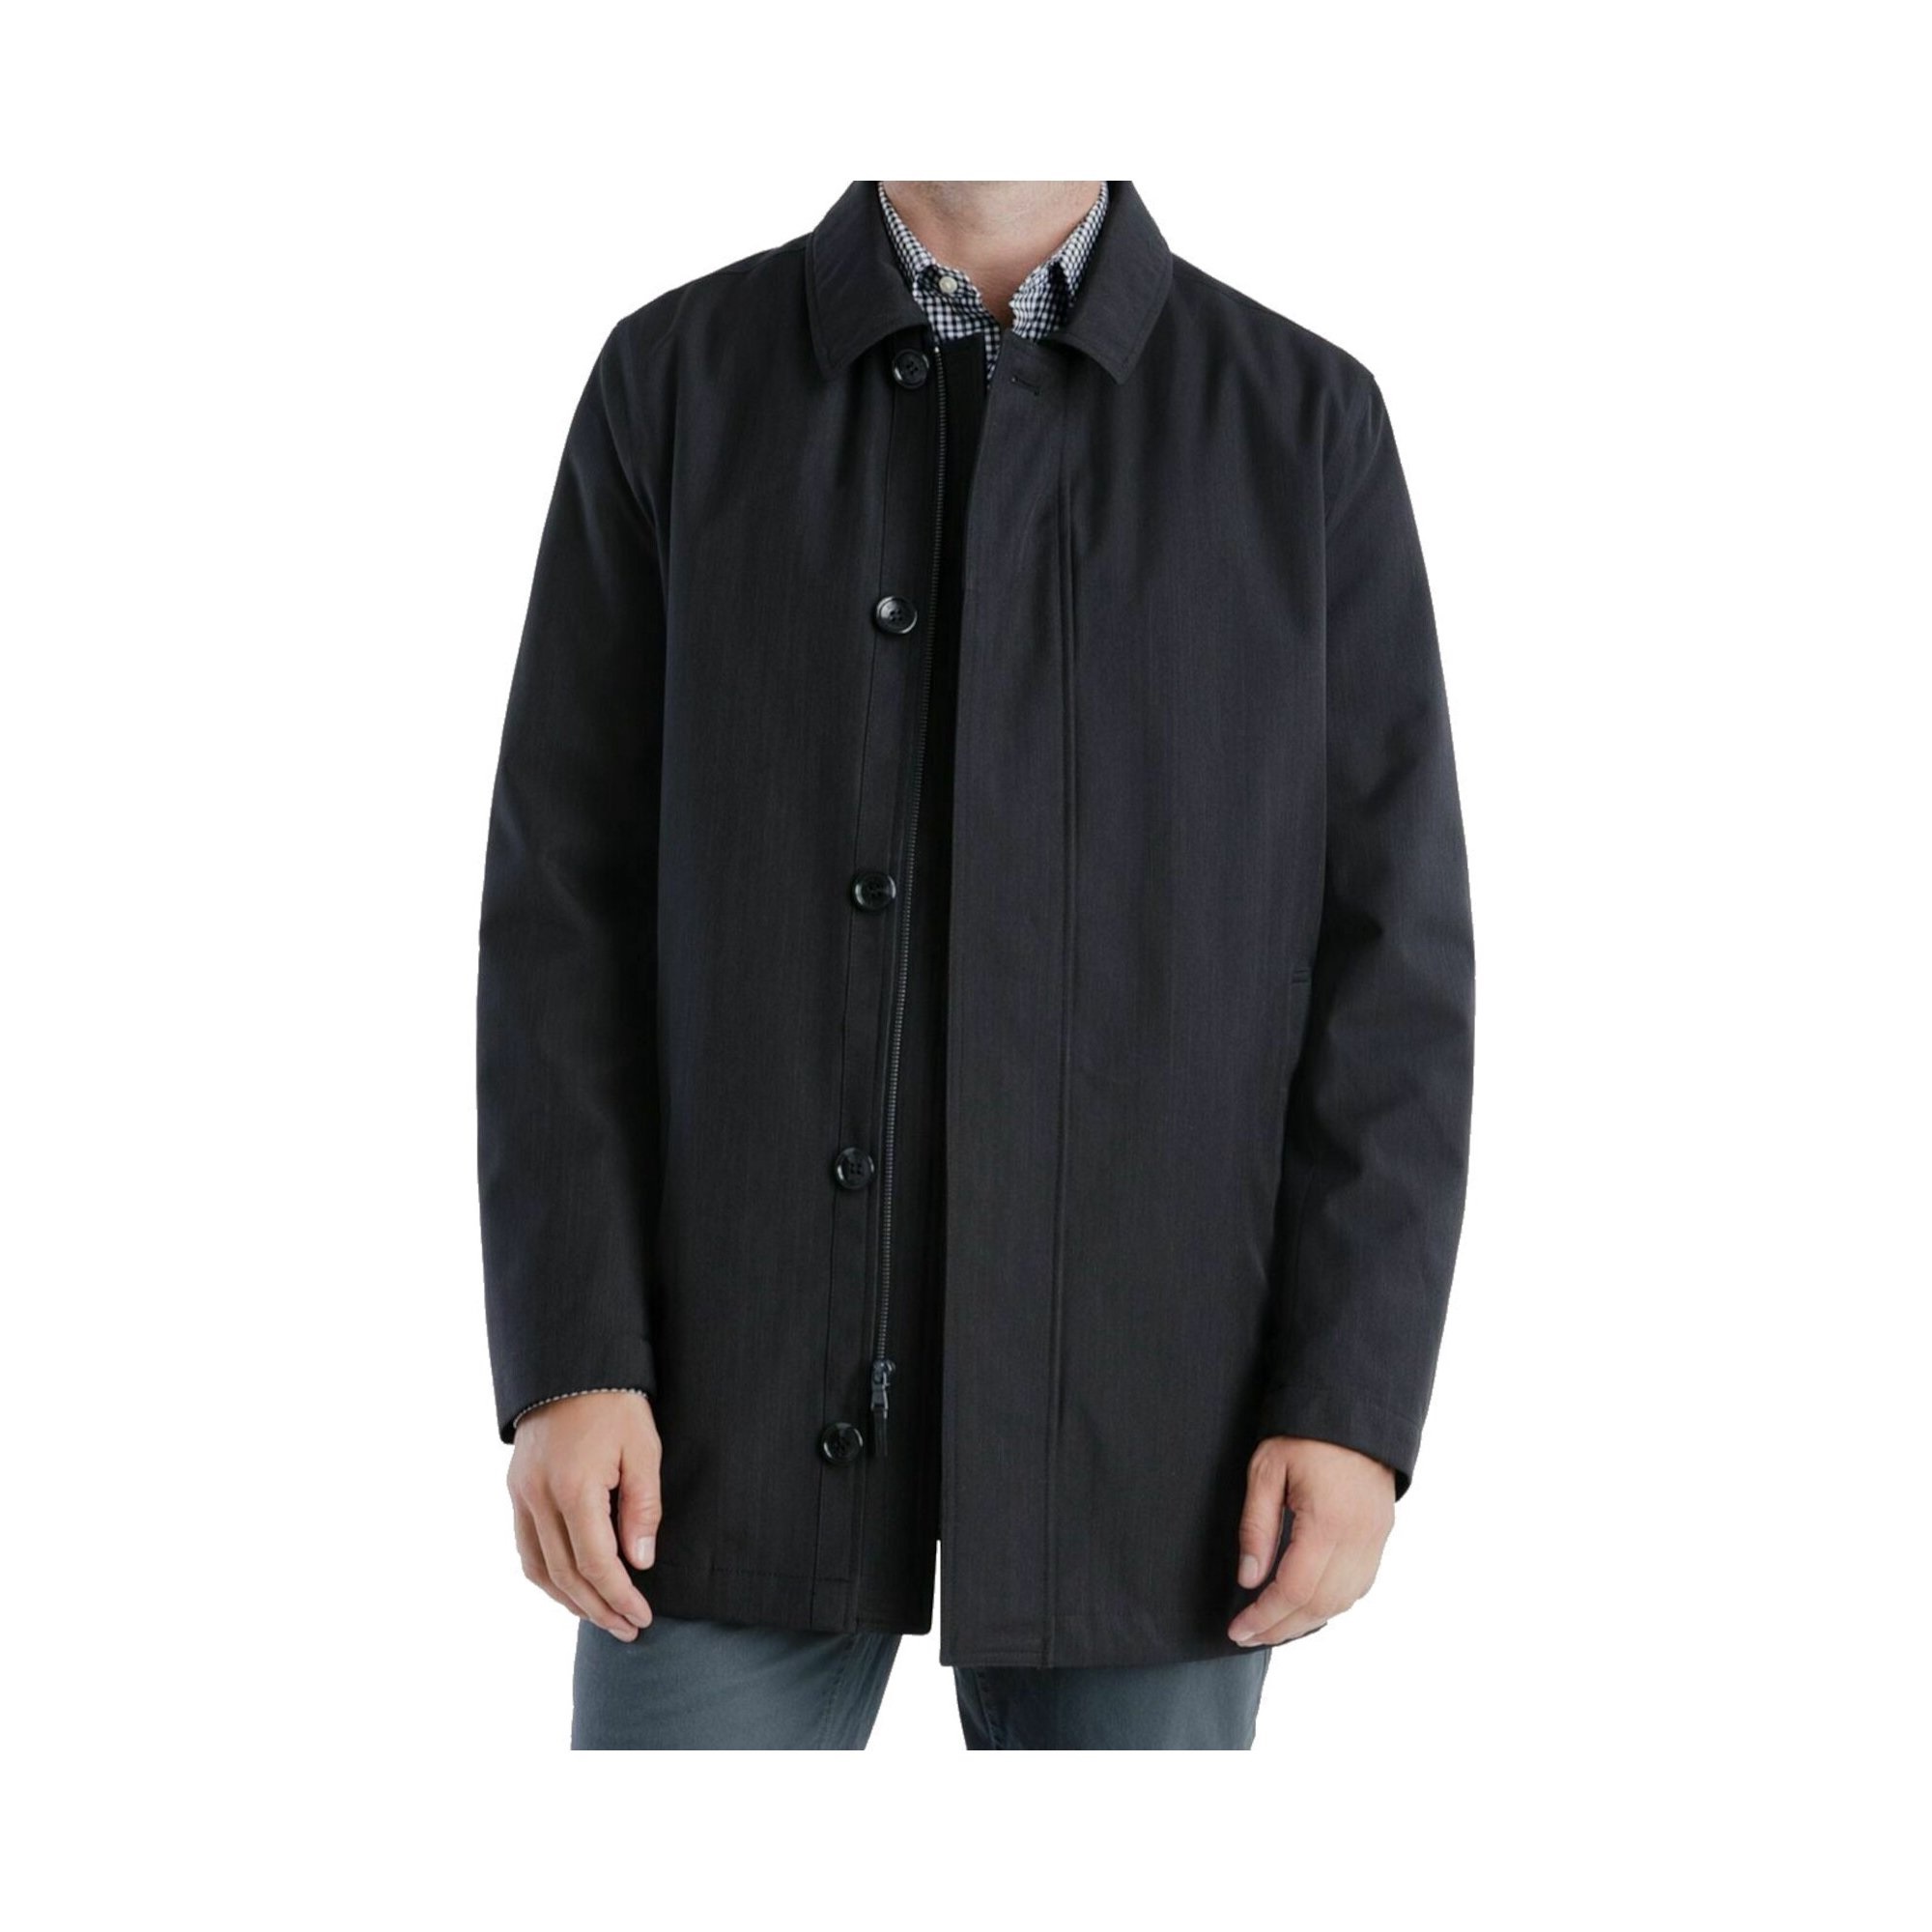 Michael Kors Men's Raincoat Black Size 36